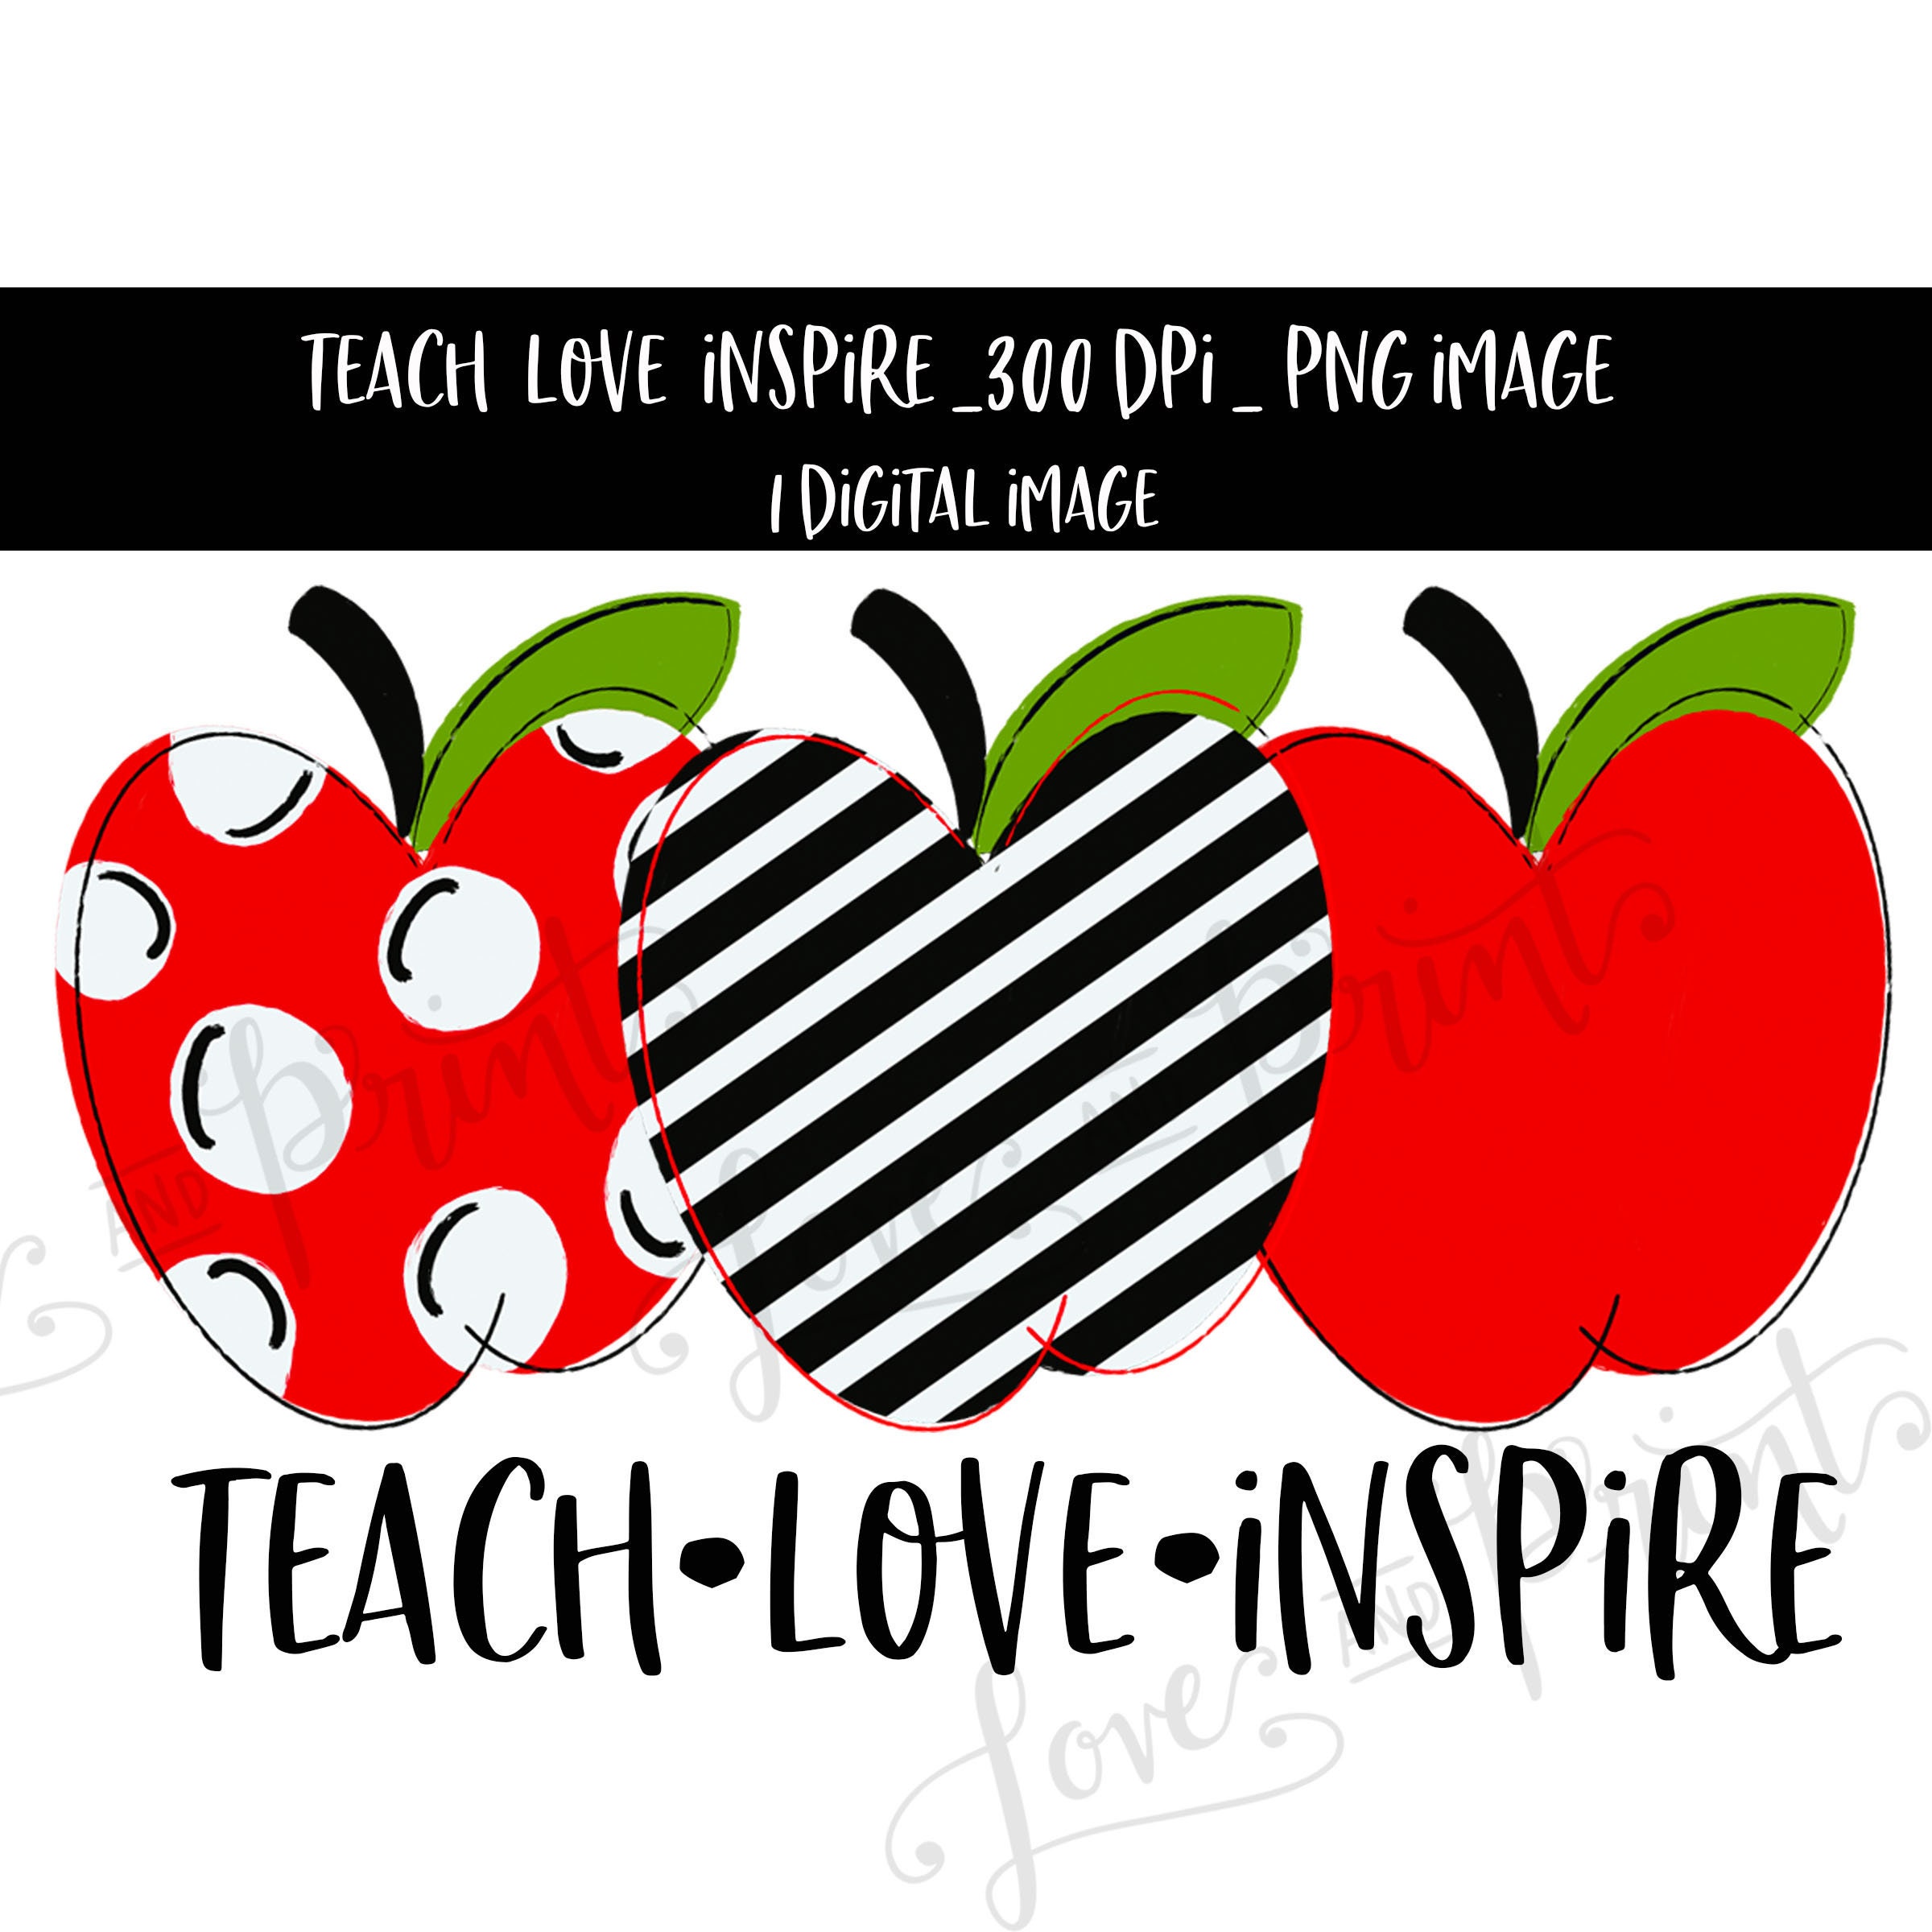 Лов граде. Teach Love inspire. Teaching Love. Картинки на сублимацию про любовь. Apple i Love you.